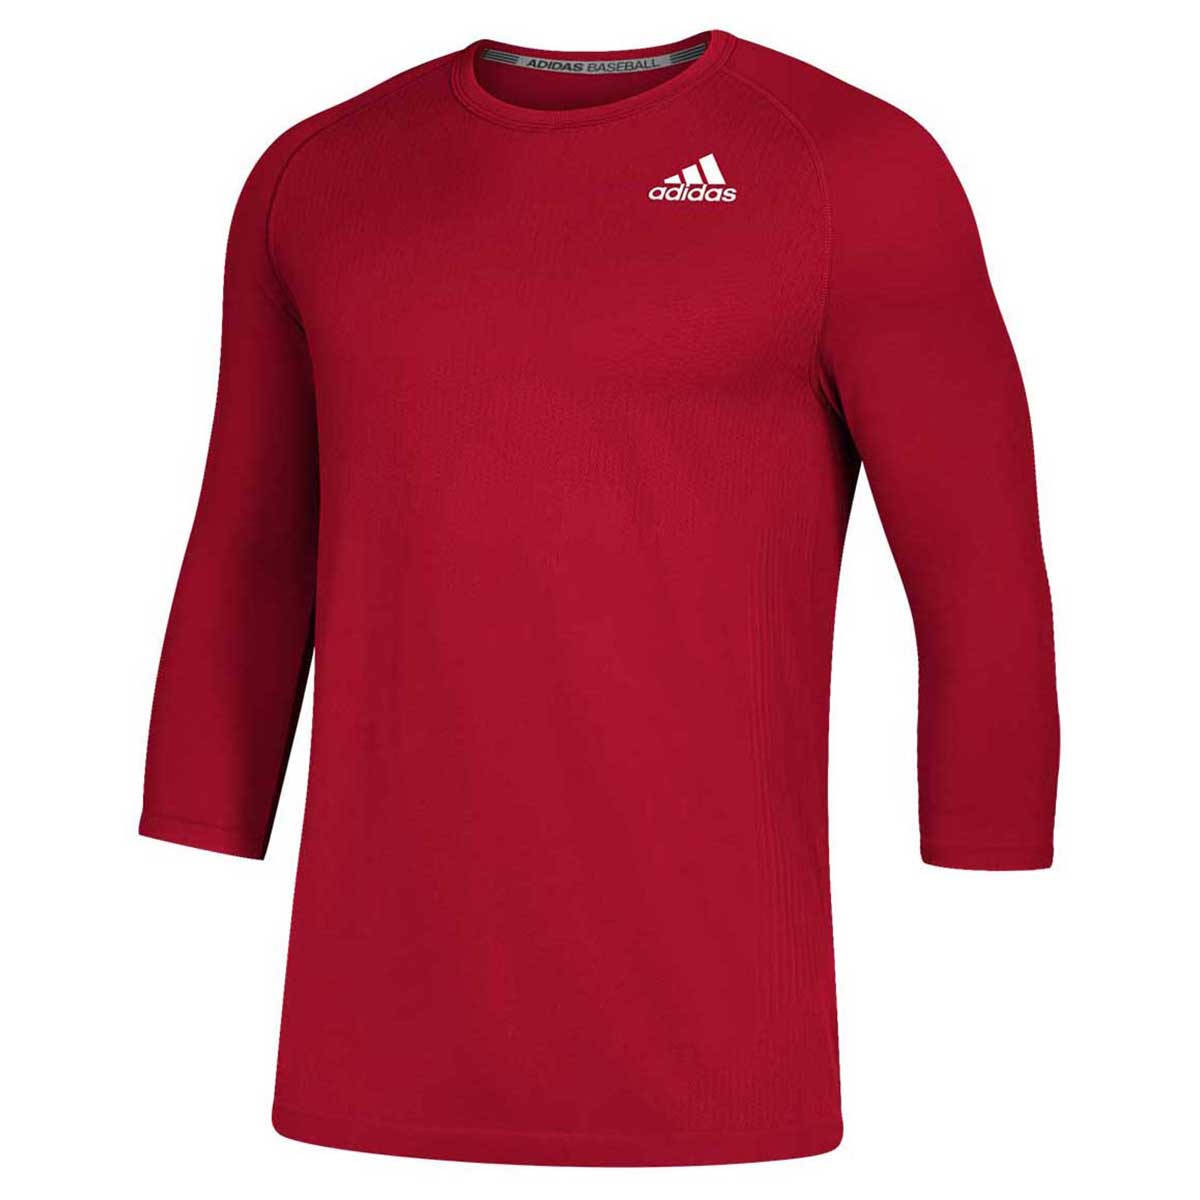 Adidas Red Pullover Baseball Jersey